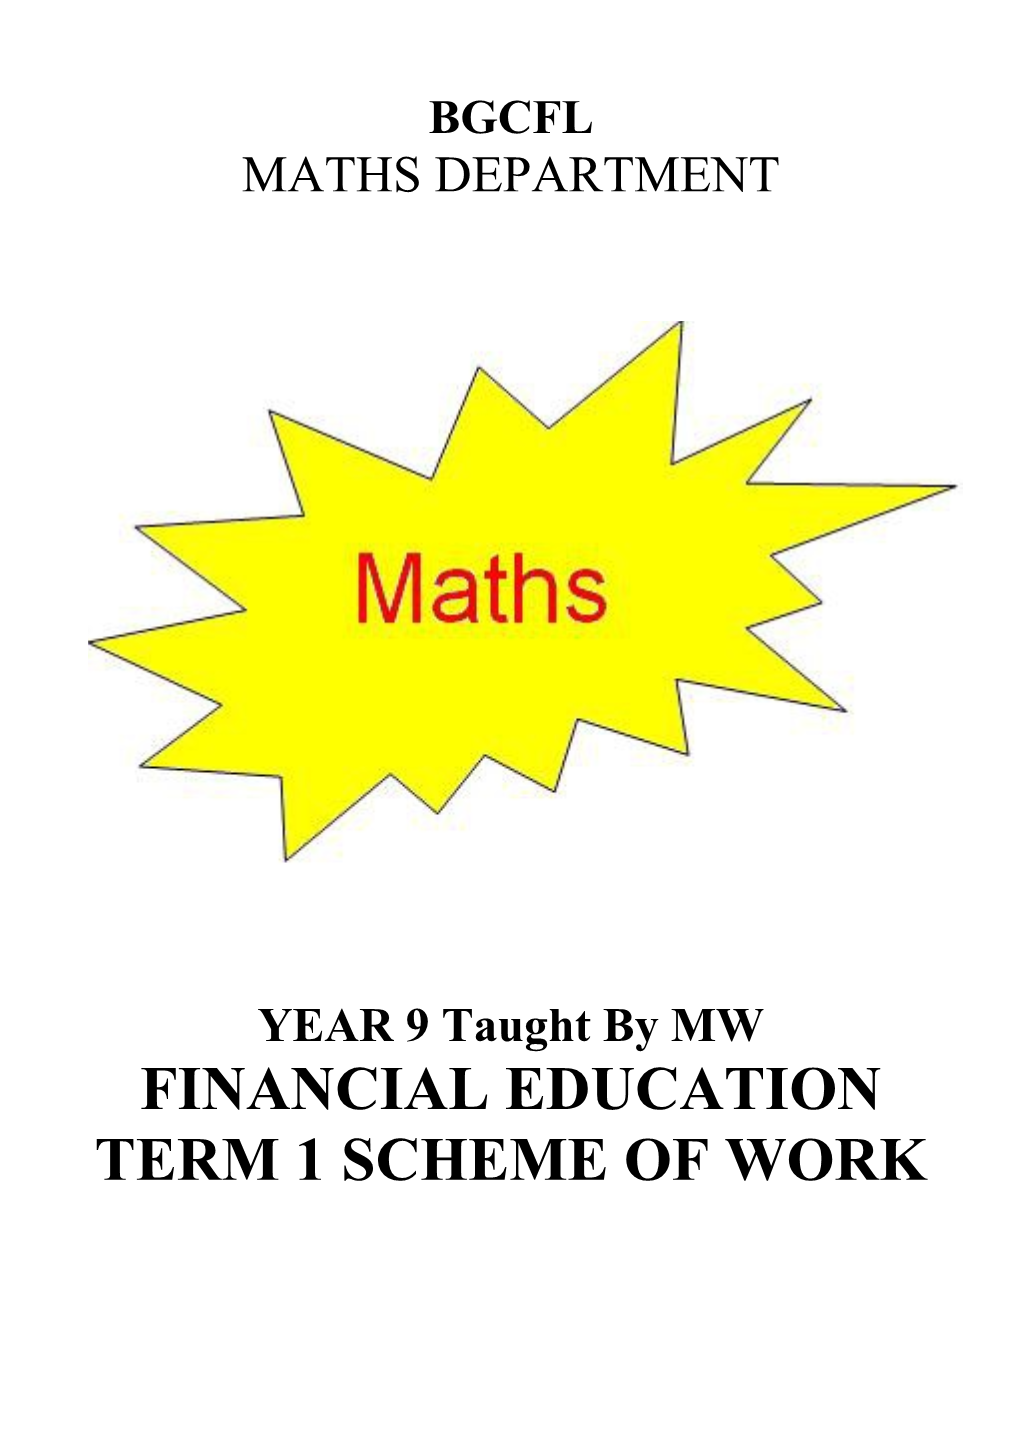 Financial Education Term 1Scheme of Work